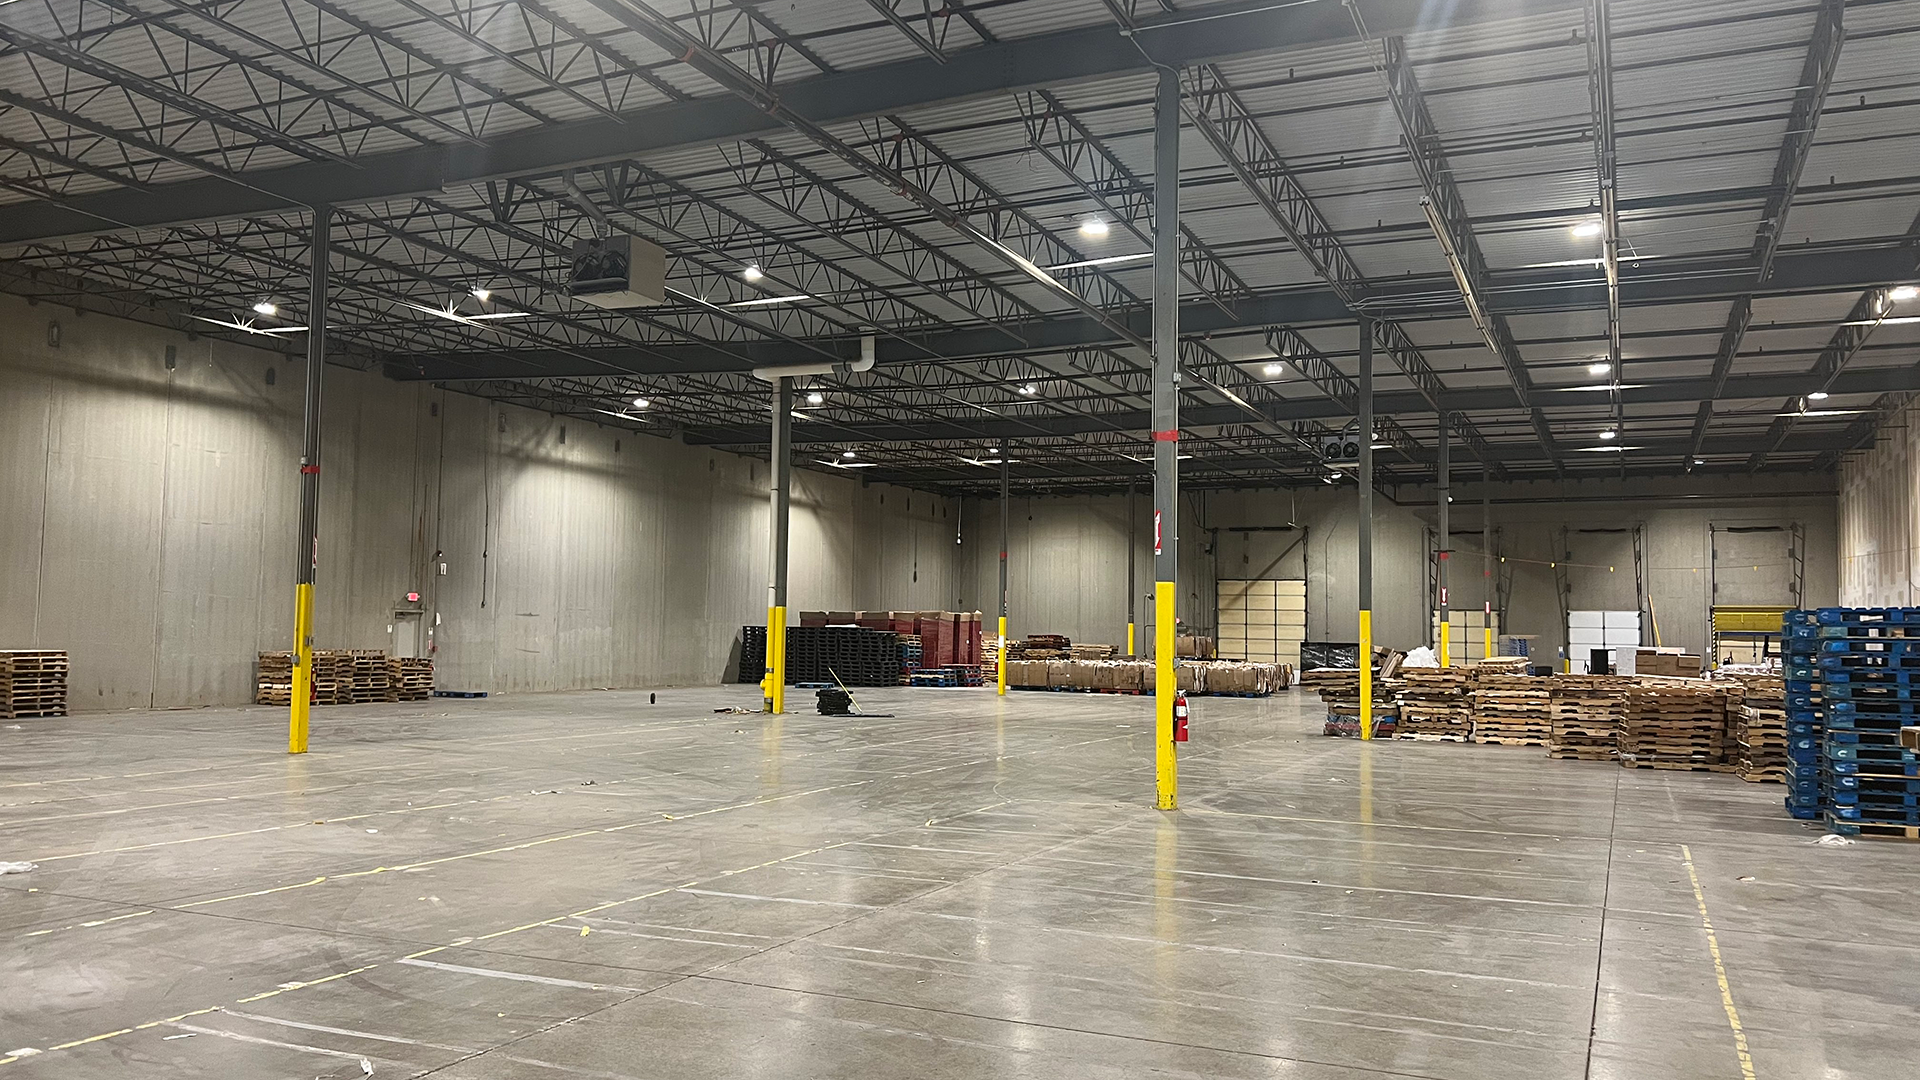 10350 Argonne Dr - Interior industrial warehouse space